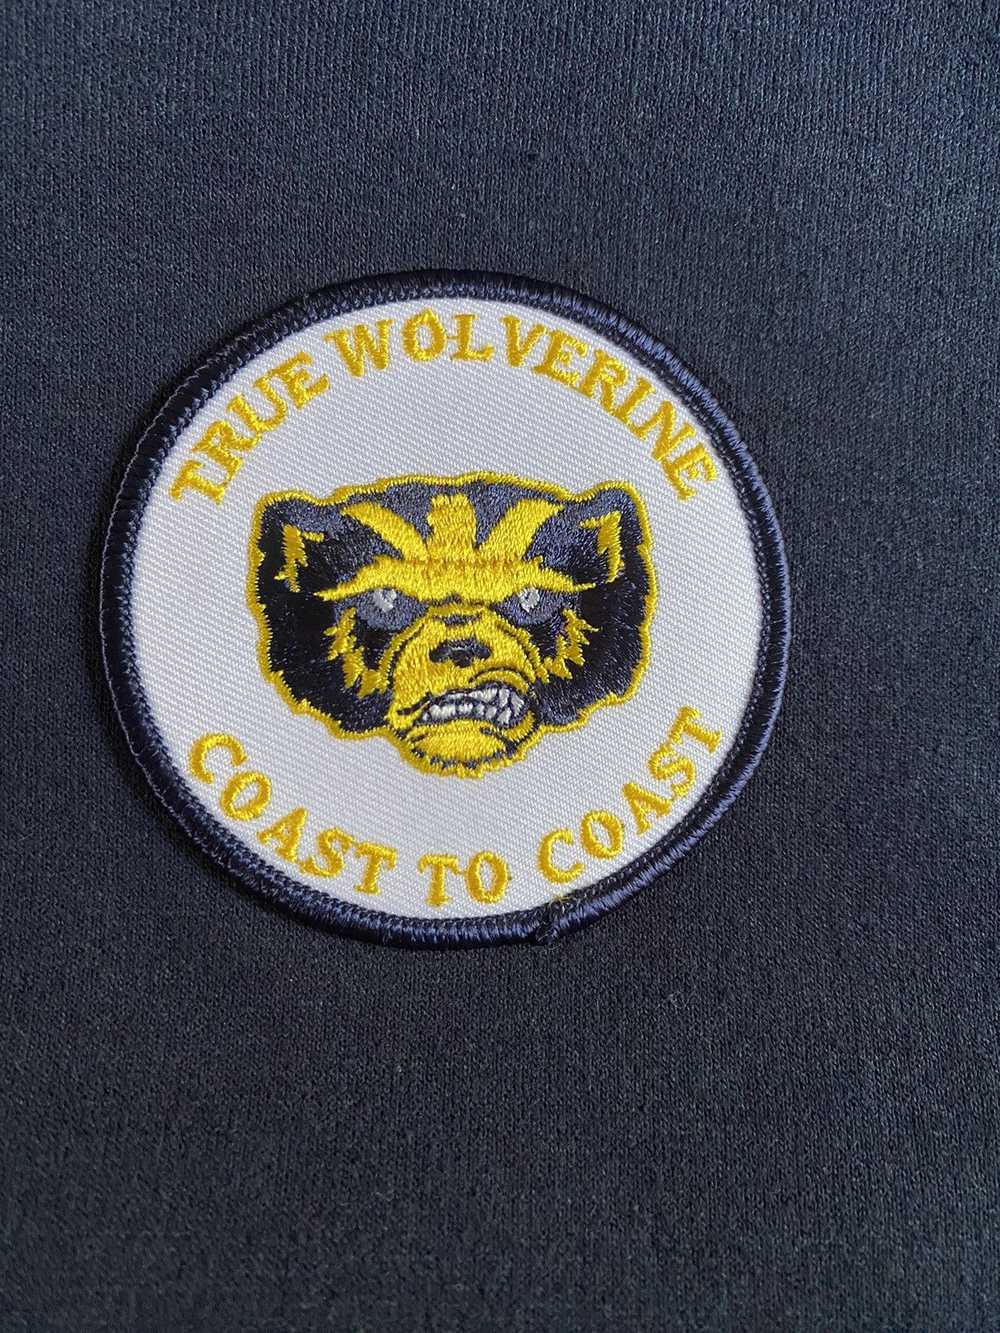 Gildan Rare Michigan Wolverines patch - image 2